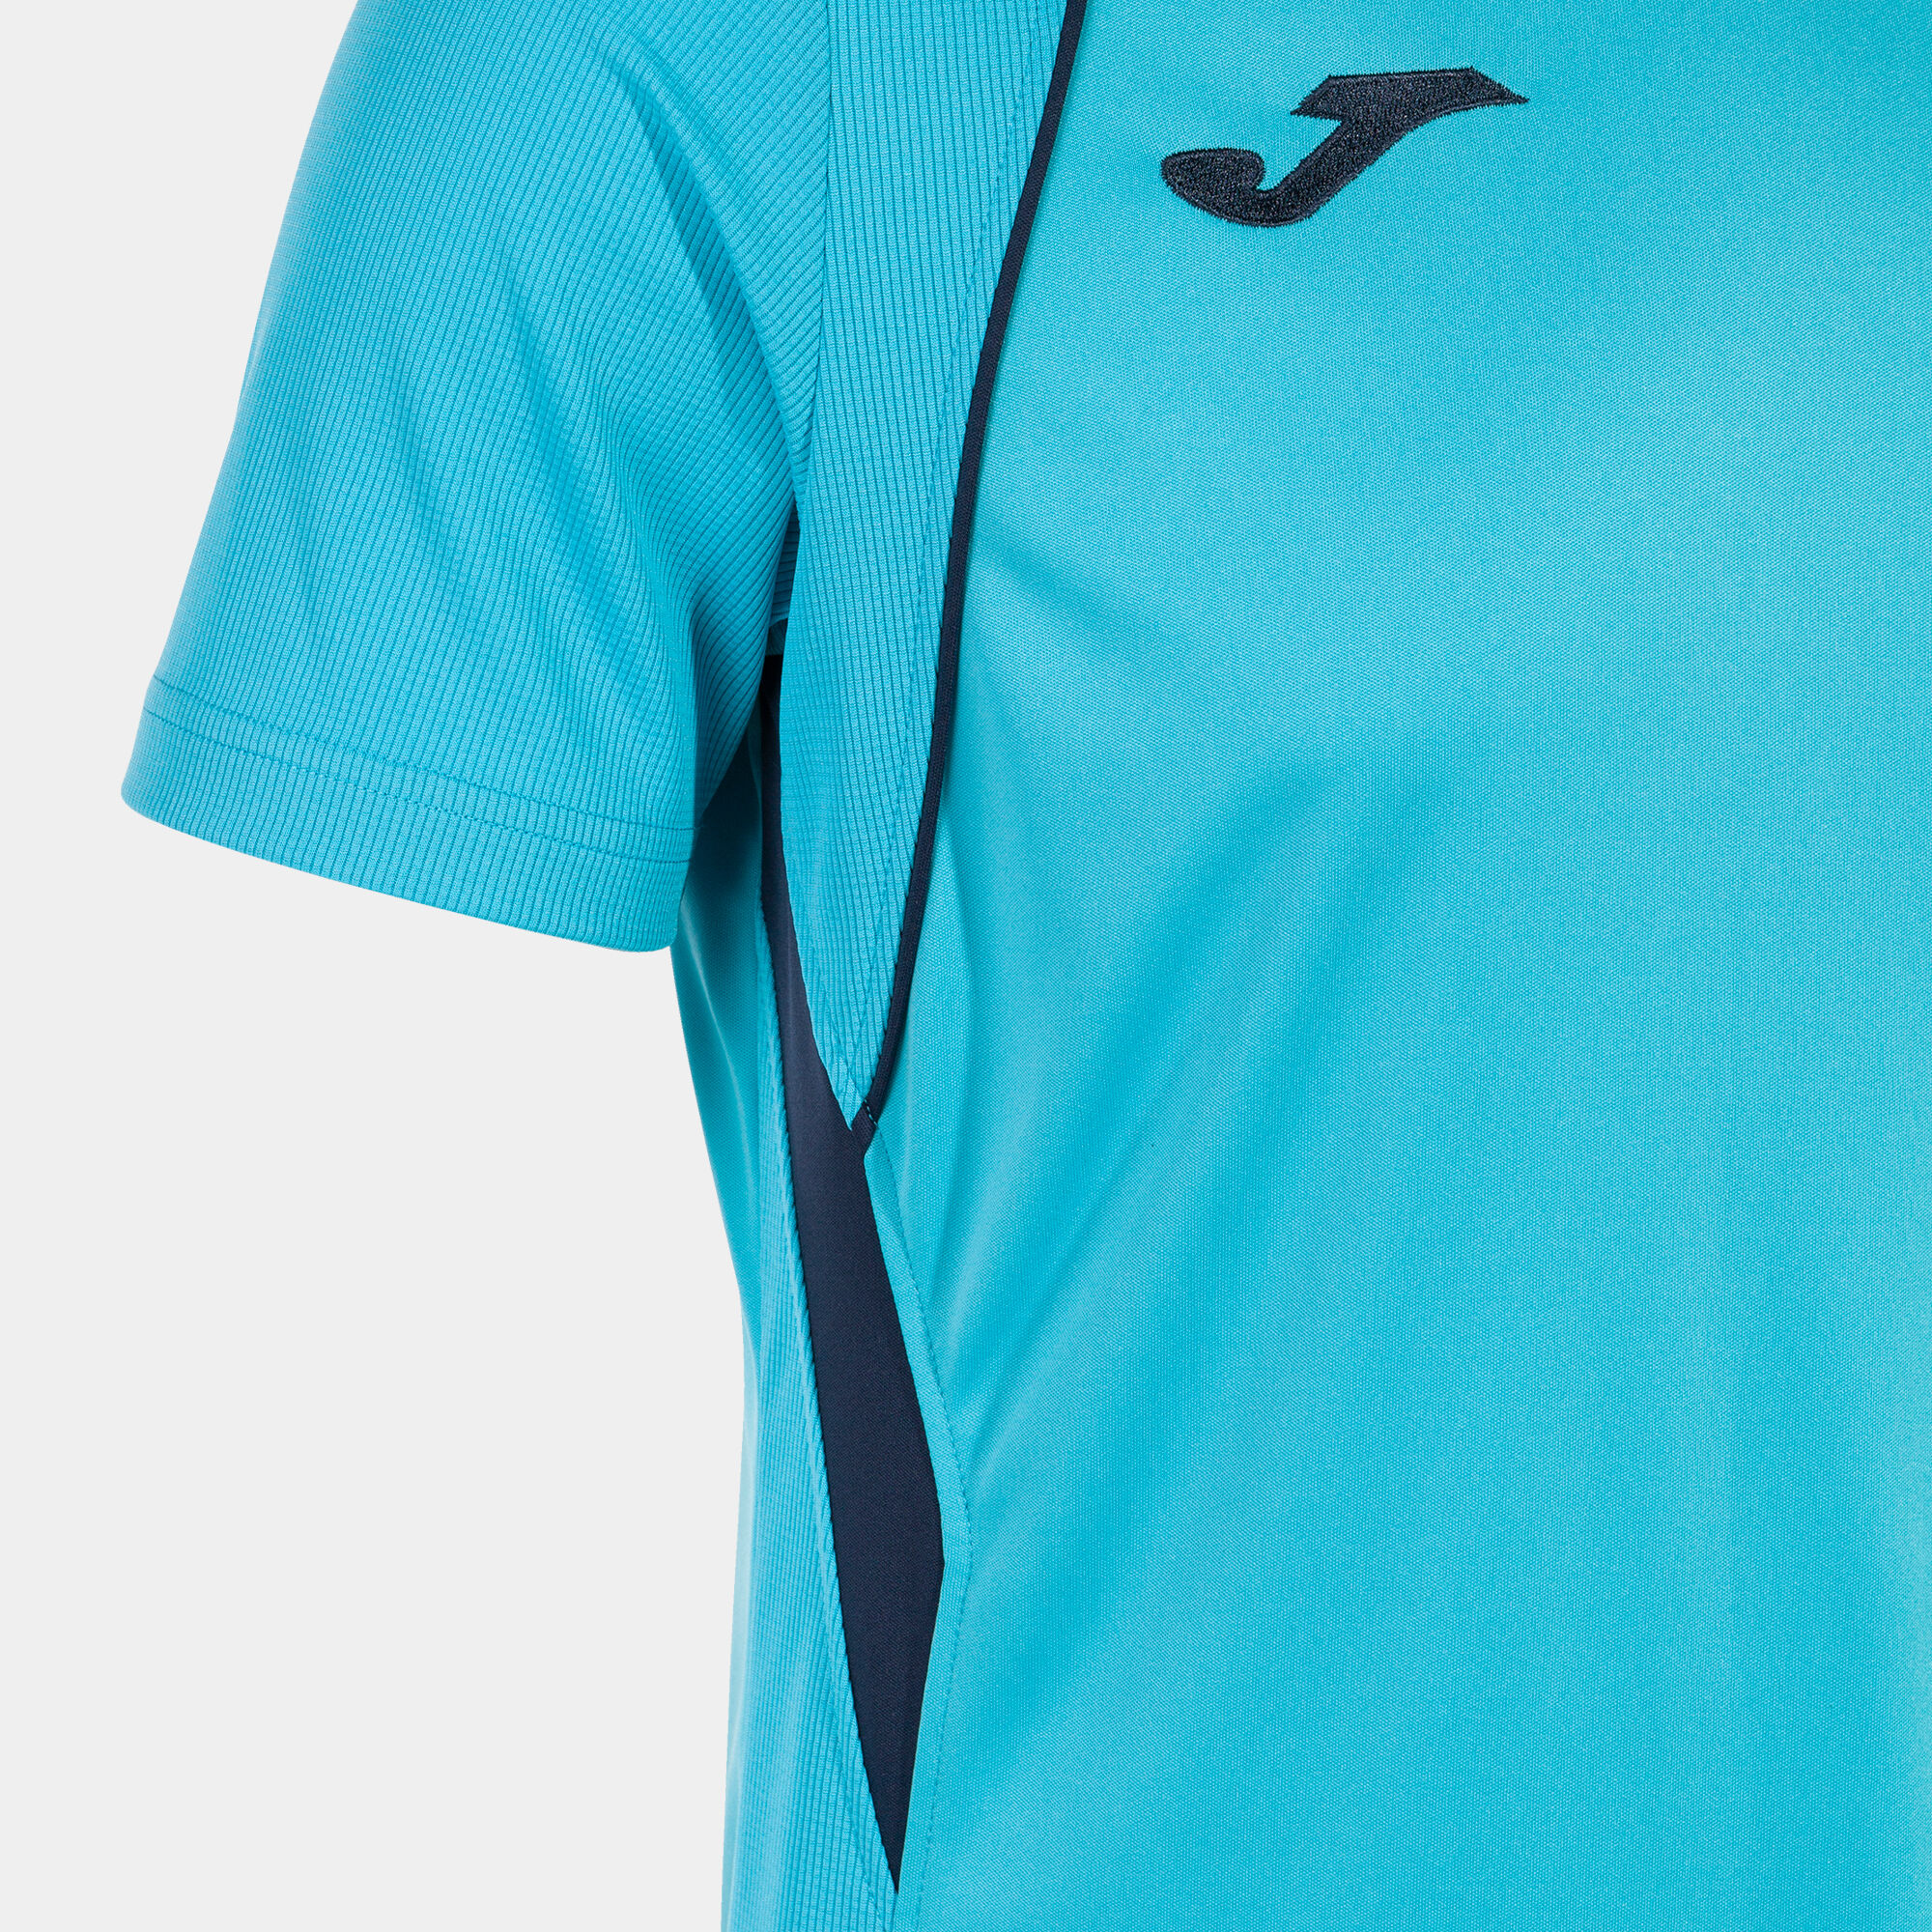 Joma Winner Chaqueta de Tenis Hombre - Fluor Turquoise/Navy